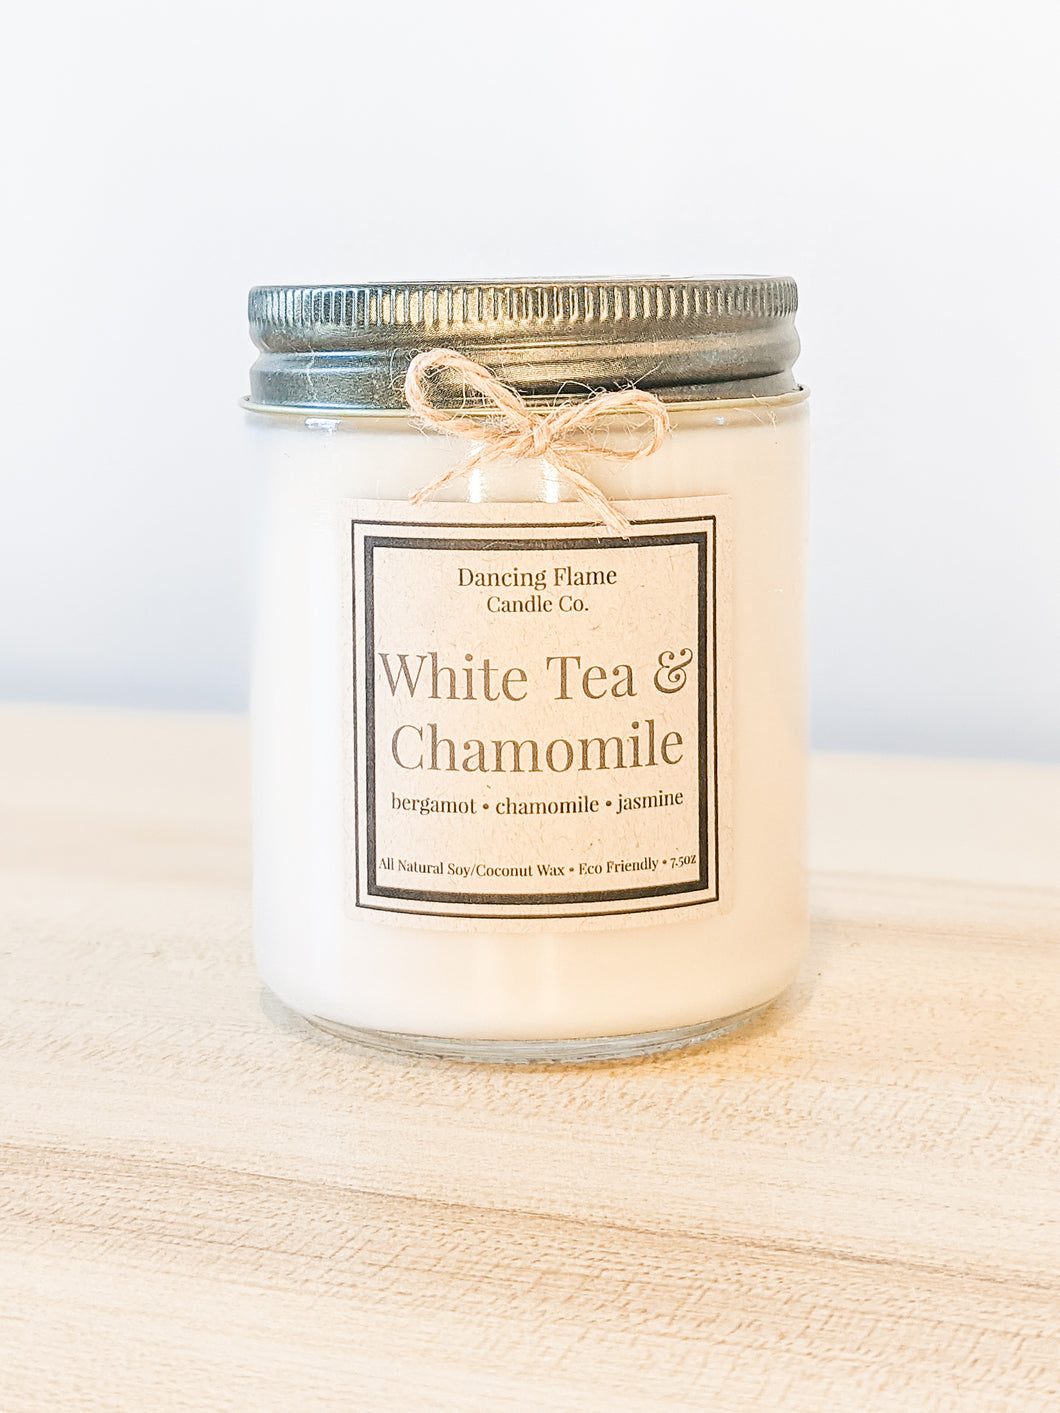 White Tea & Chamomile Soy/Coconut Wax Candle